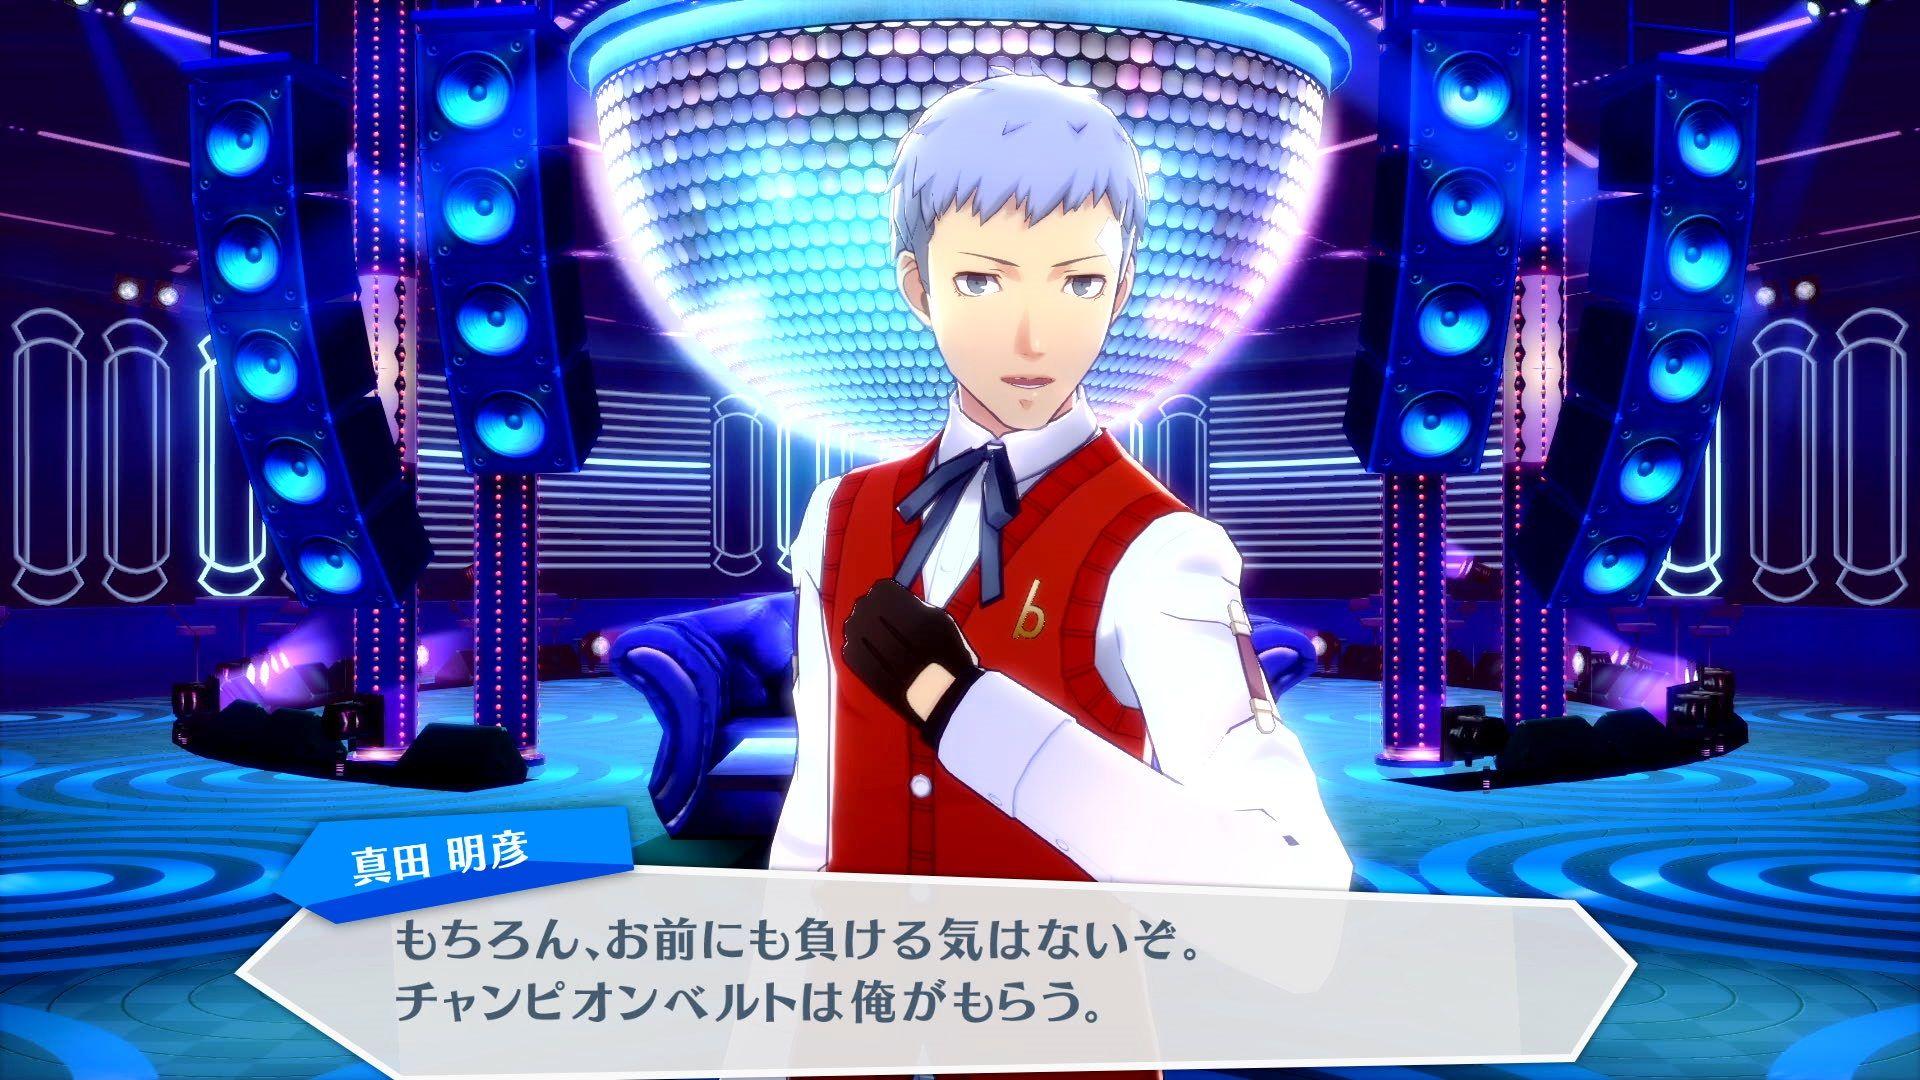 New Persona 3 Dancing and Persona 5 Dancing Screenshots, Commu Mode